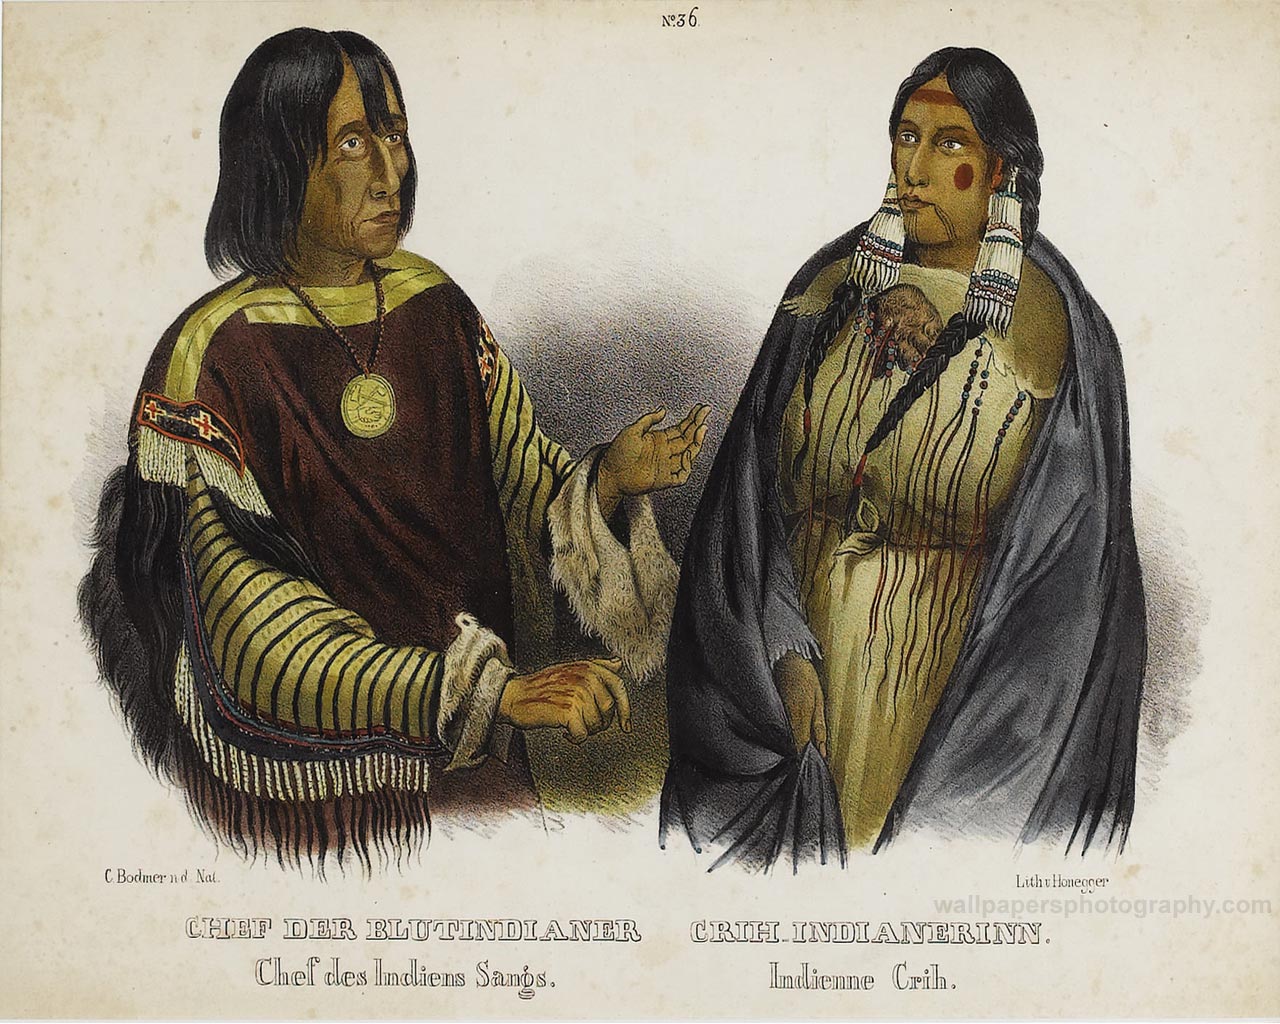 Native American Indian Wallpaper Art Print Poster Photos